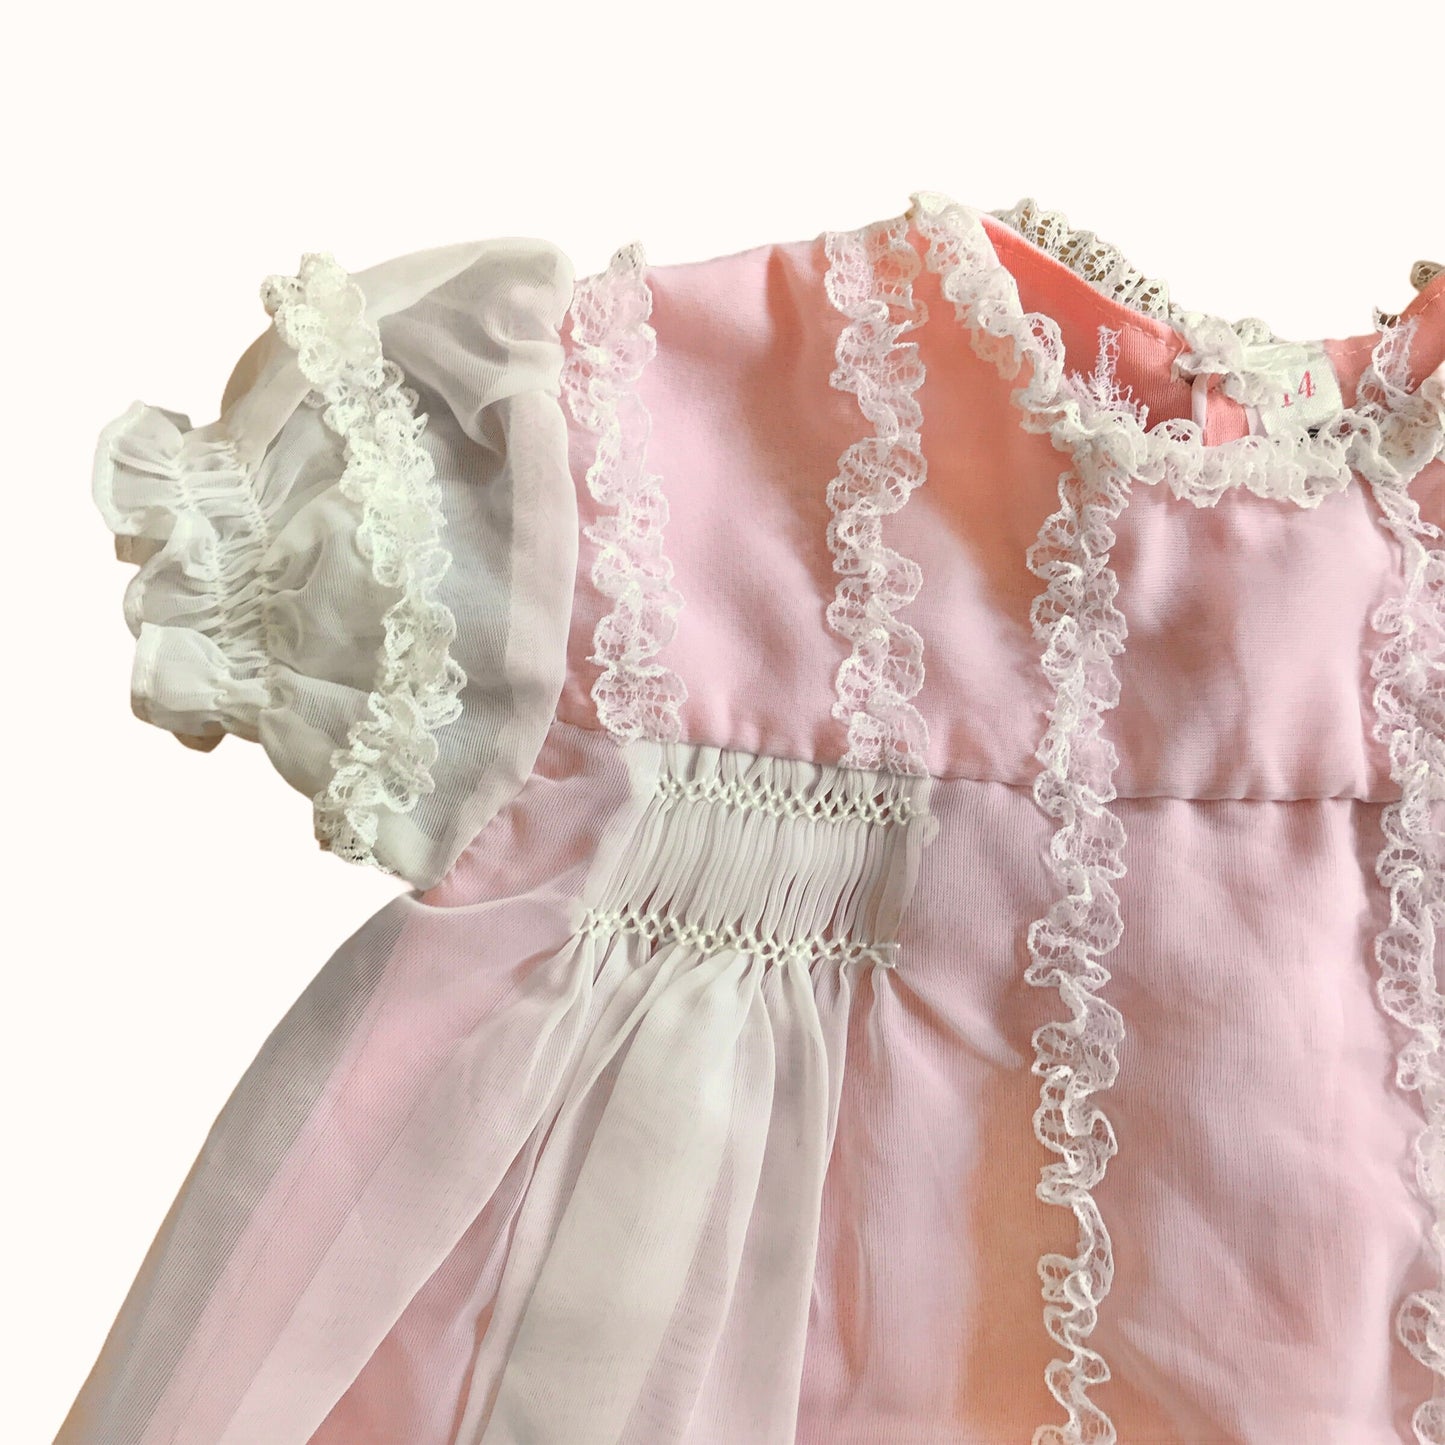 Vintage 60s Baby White/Pink Ruffle Sheer Dress British Made 6-9 Months